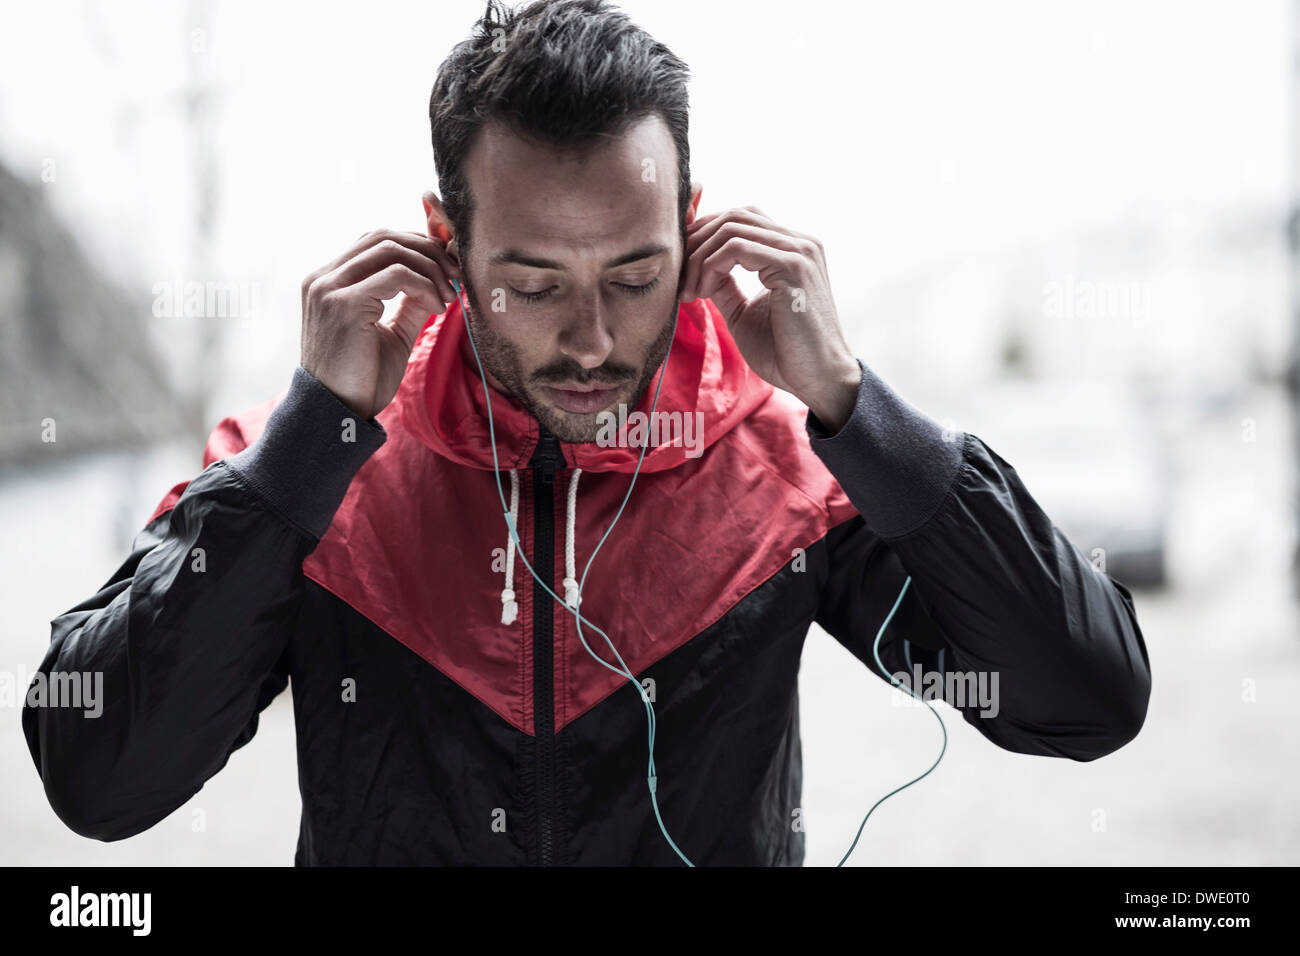 Sporty man in jacket adjusting headphones Stock Photo